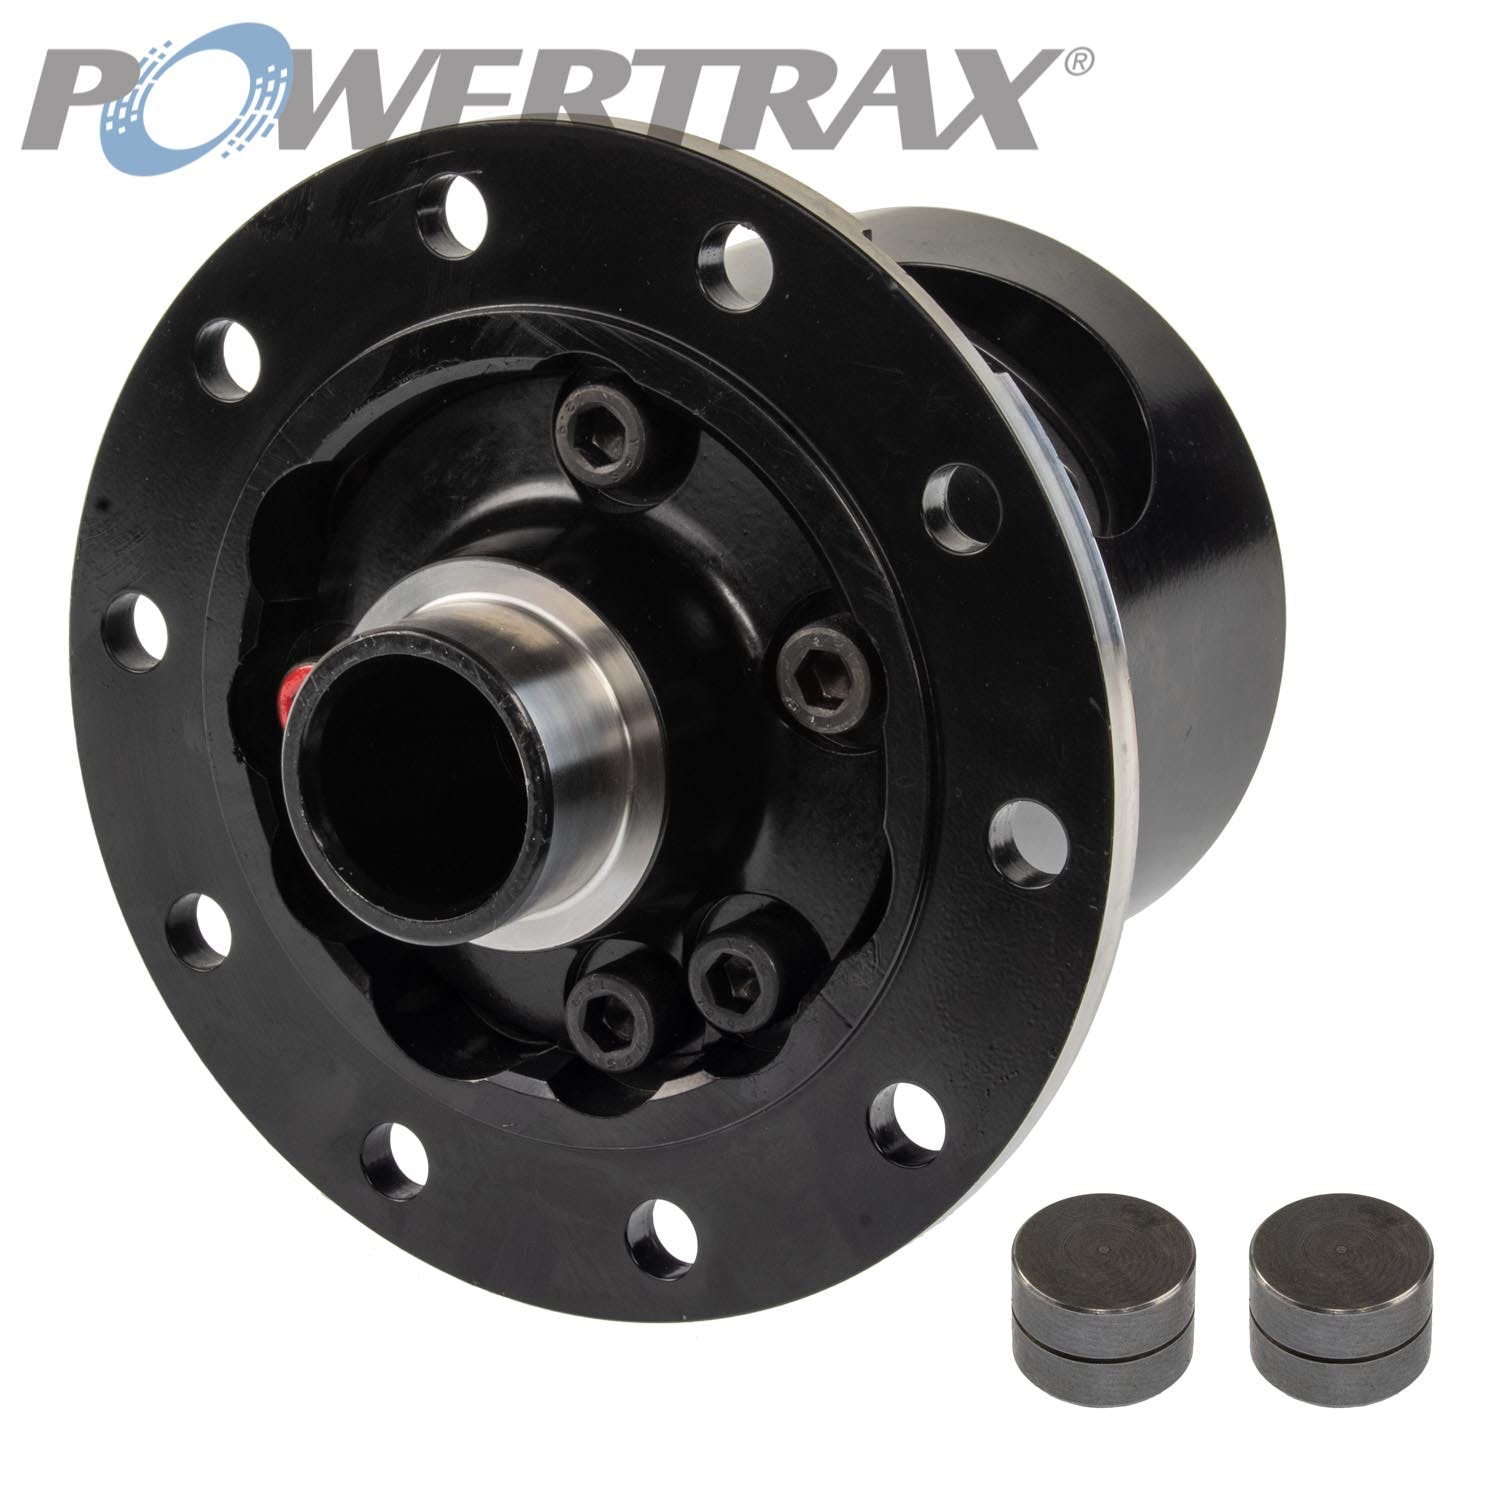 PowerTrax GT209533 Powertrax - Grip PRO Traction System